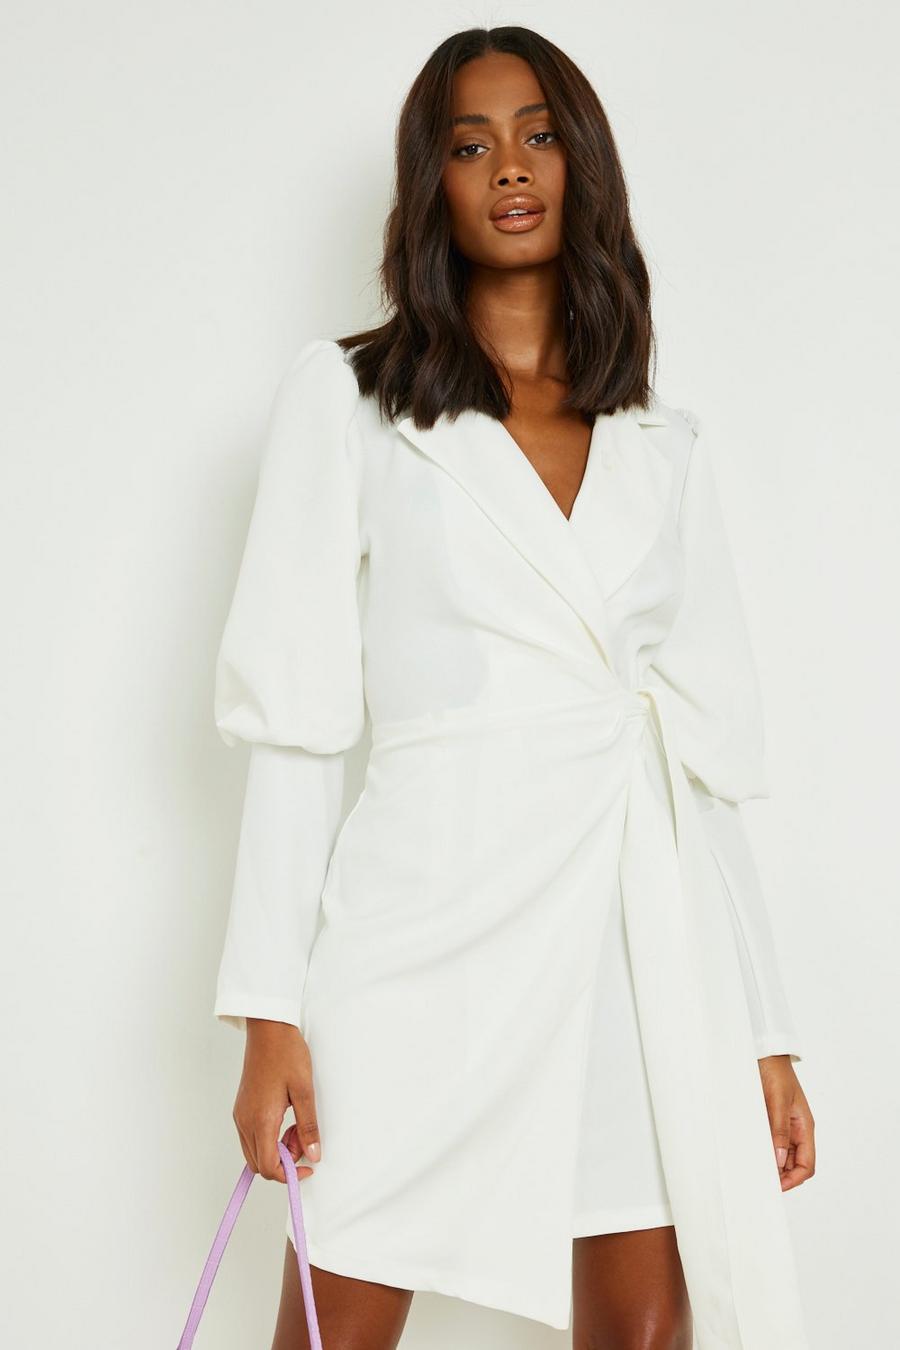 Ivory white Volume Sleeve Bow Side Blazer Dress